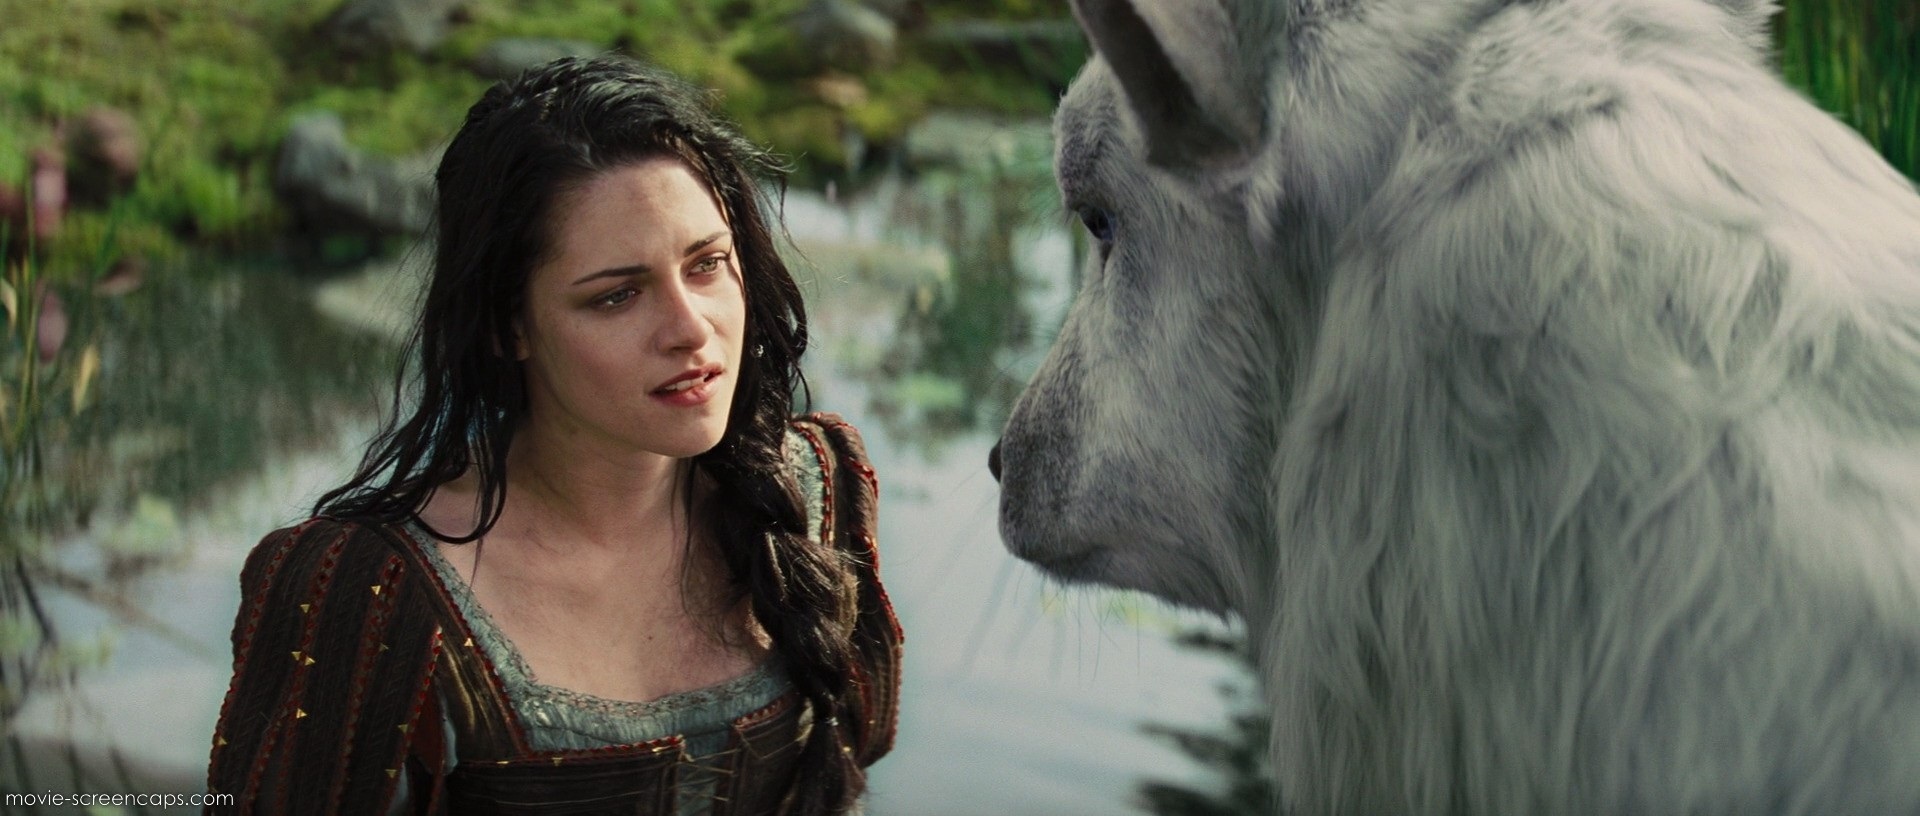 Snow white and the huntsman wikipedia